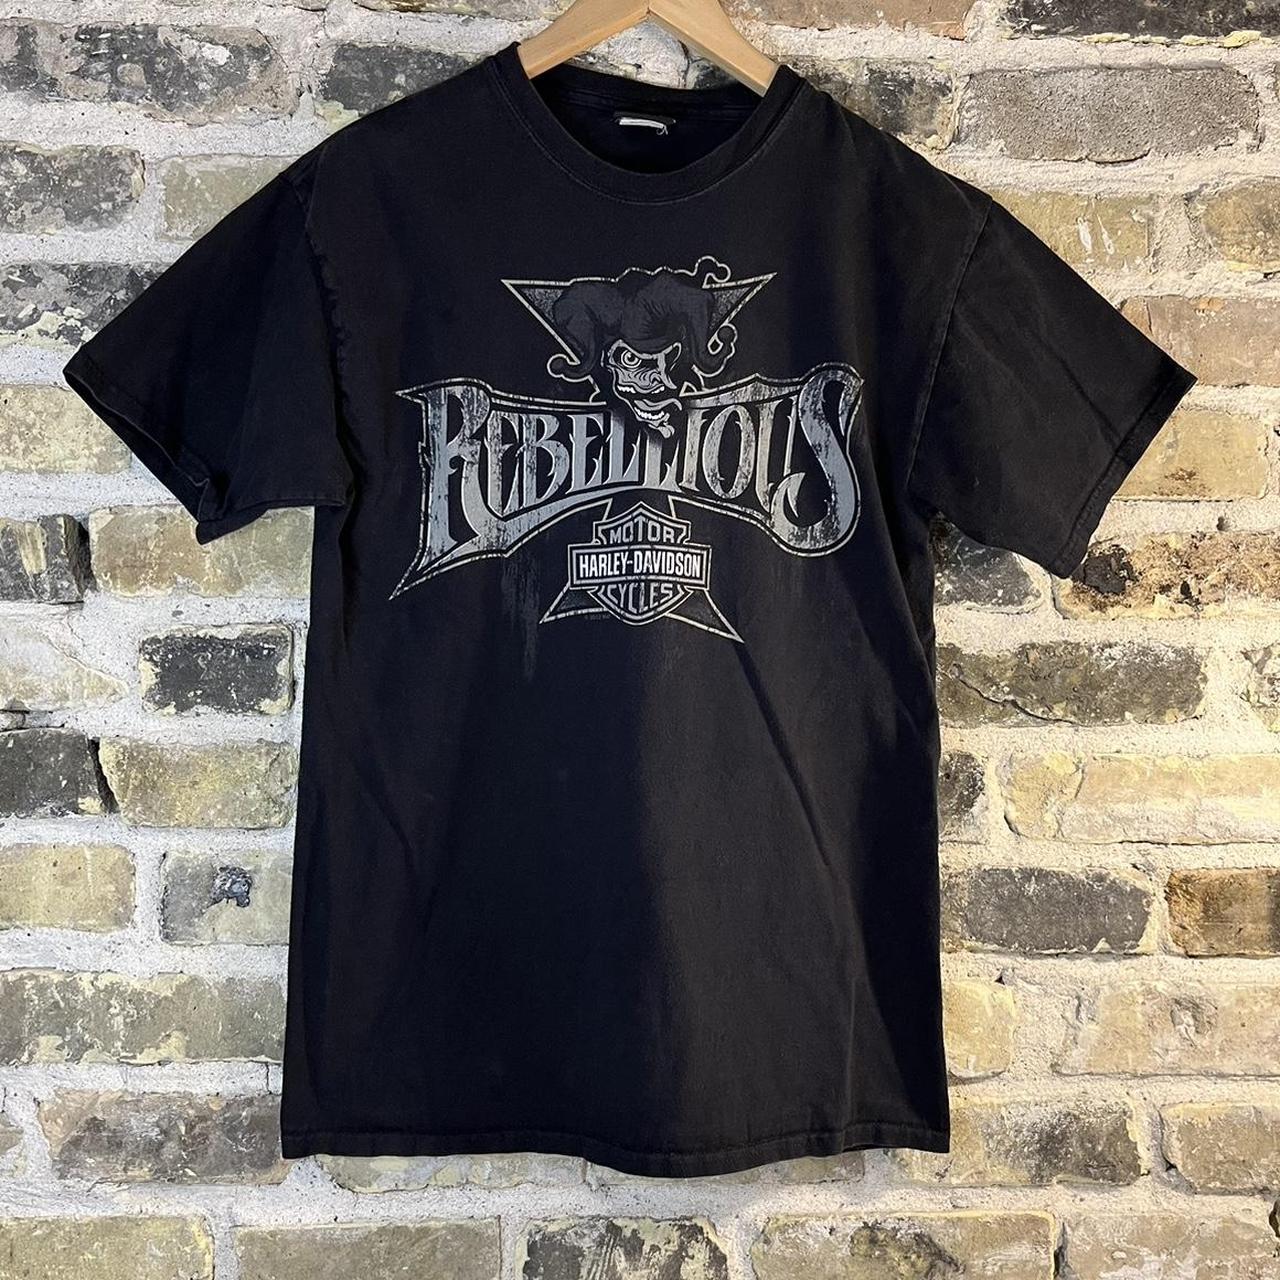 Harley Davidson Men's Black and Grey T-shirt